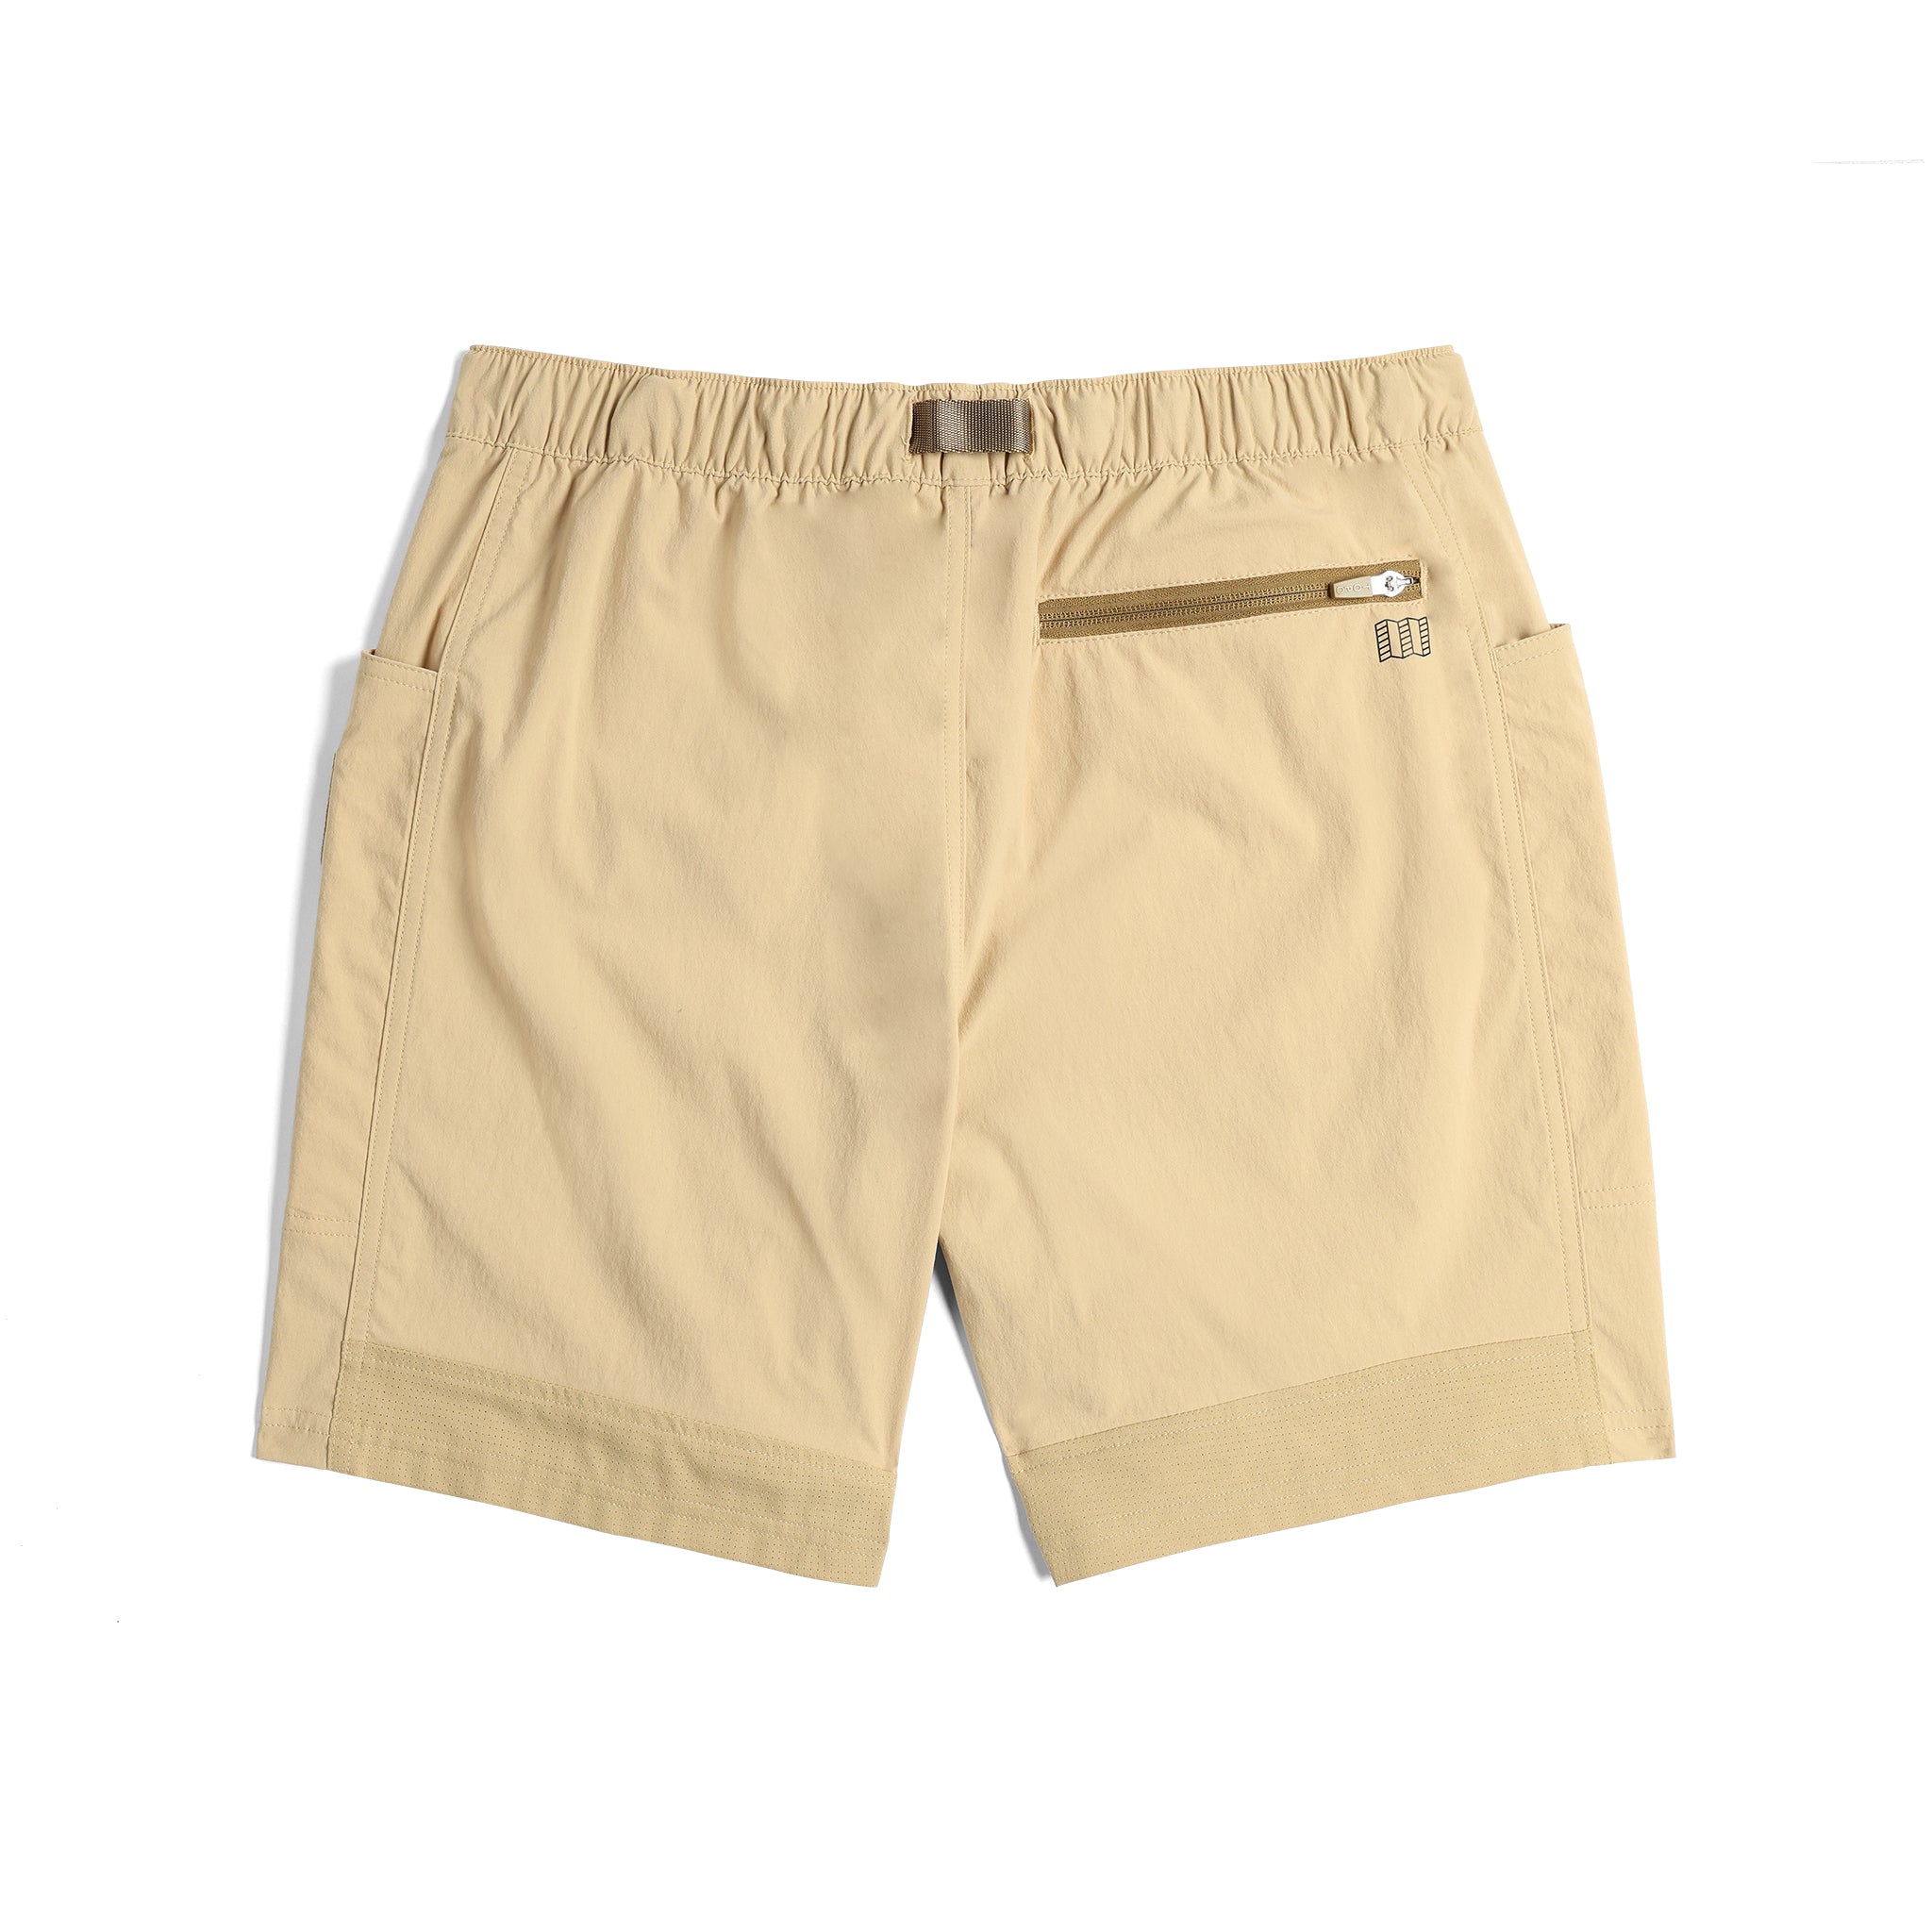 Back View of Topo Designs Retro River Shorts - Men's in "Sahara"